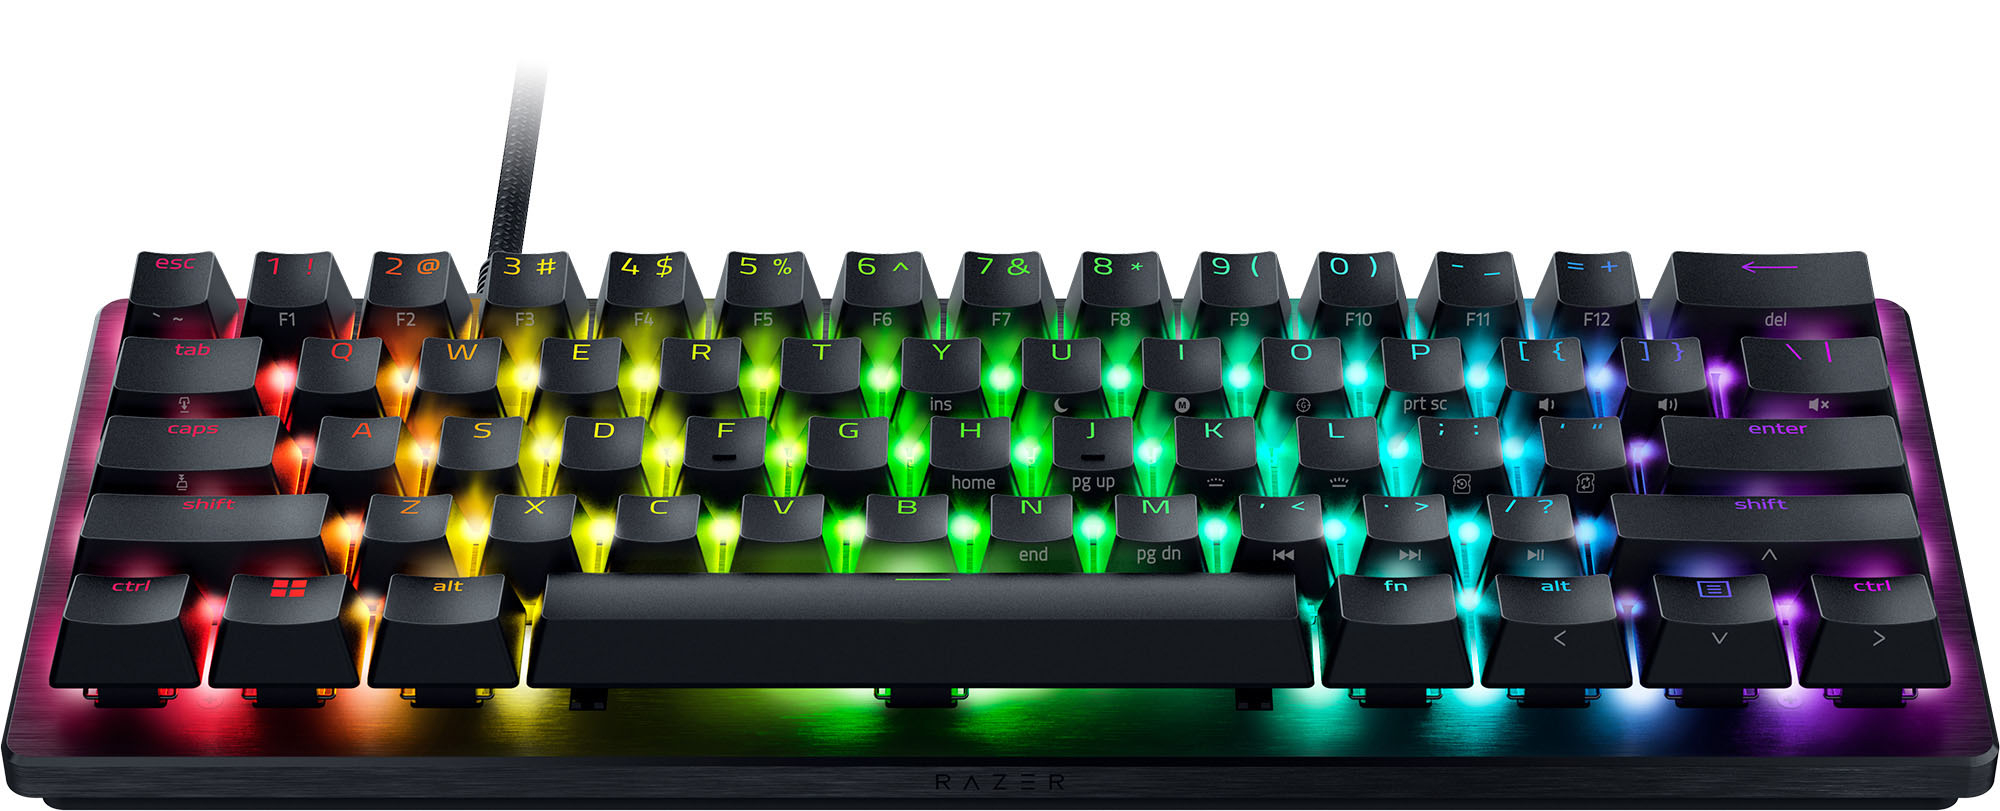 Razer Launches New Ultracompact Huntsman Mini Analog Keyboard - CNET